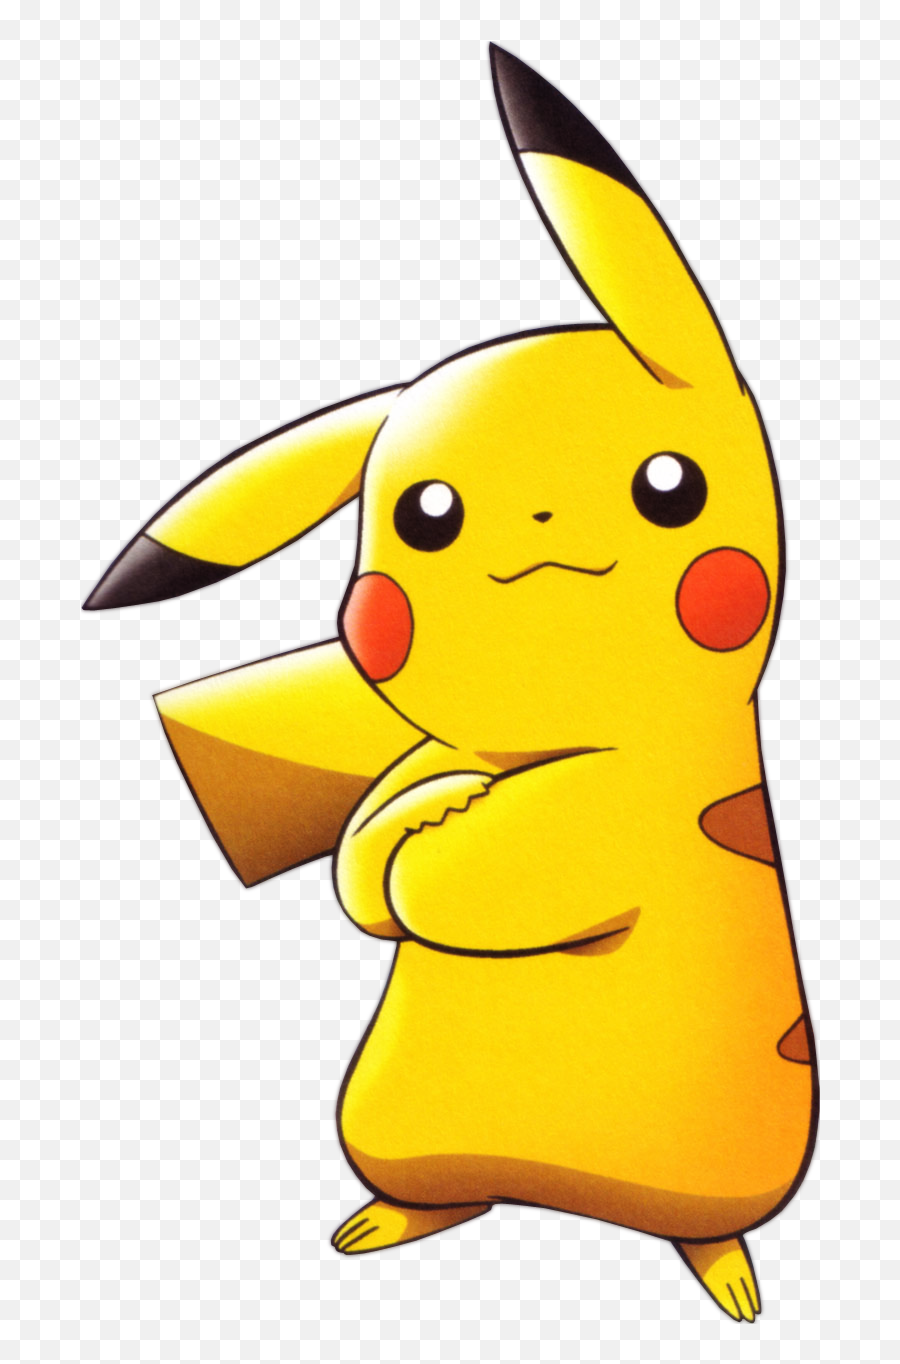 Pikachu Clipart Lightning Pikachu - Pikachu Imagenes De Pokemon Emoji,Pikachu Emotions